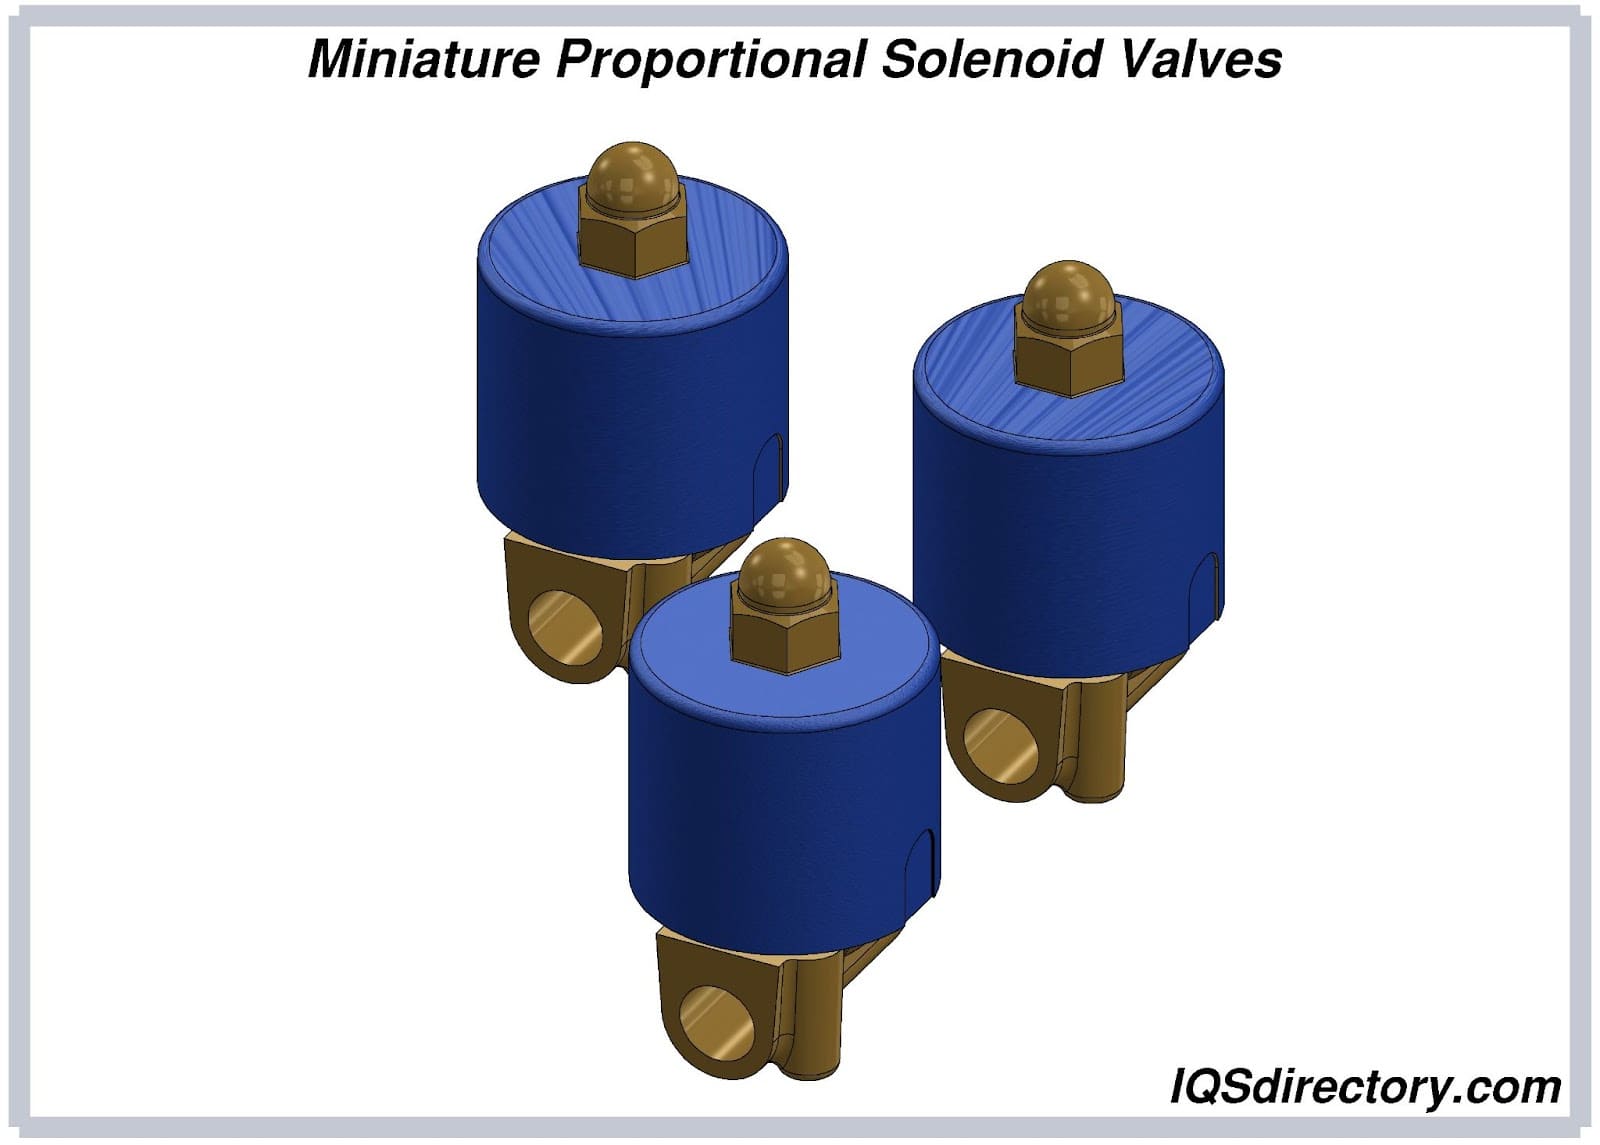 Miniature Proportional Solenoid Valves